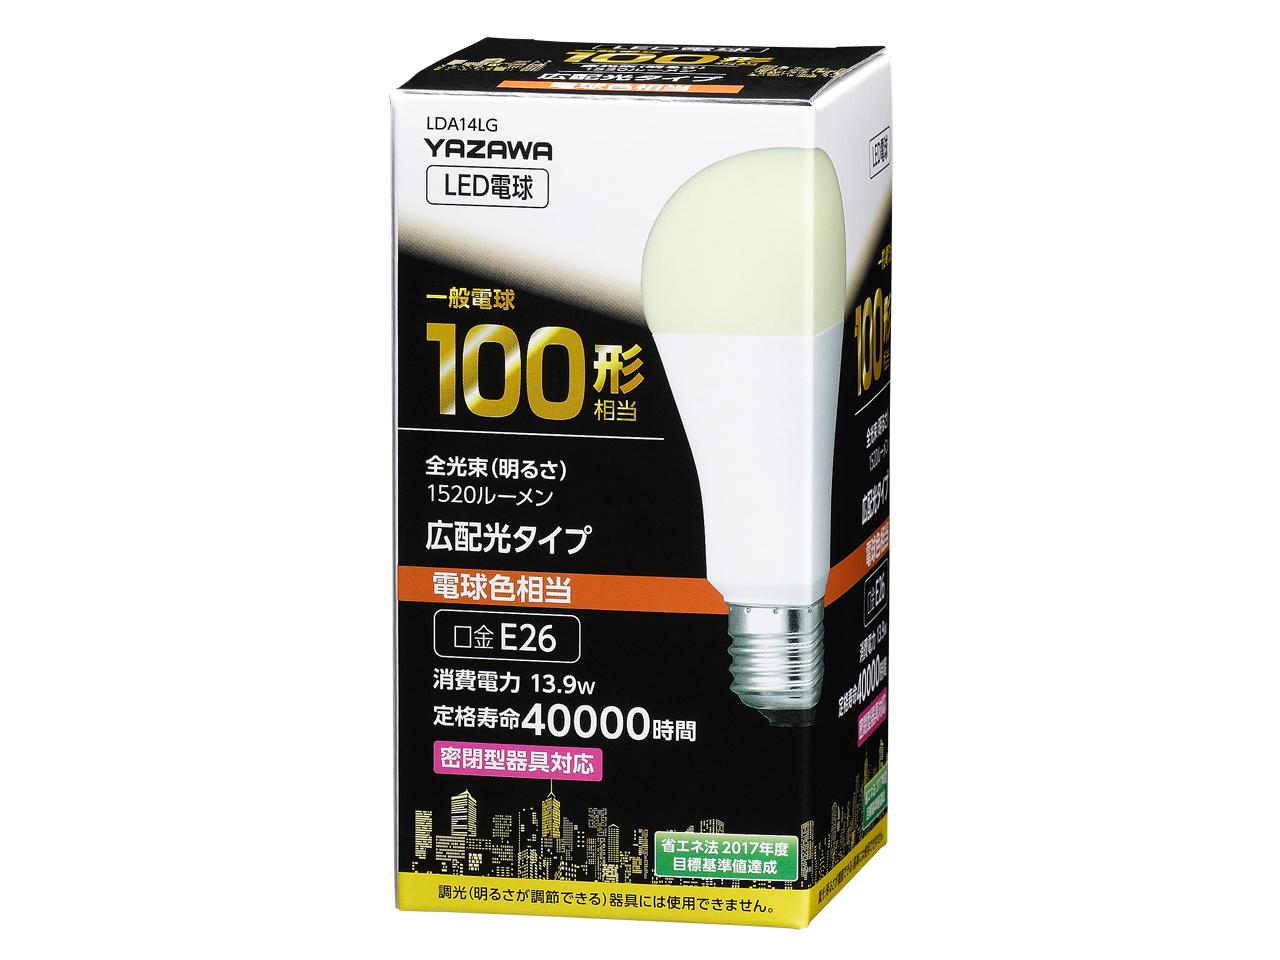 ʓd`LED 100W dF  LDA14LG 1